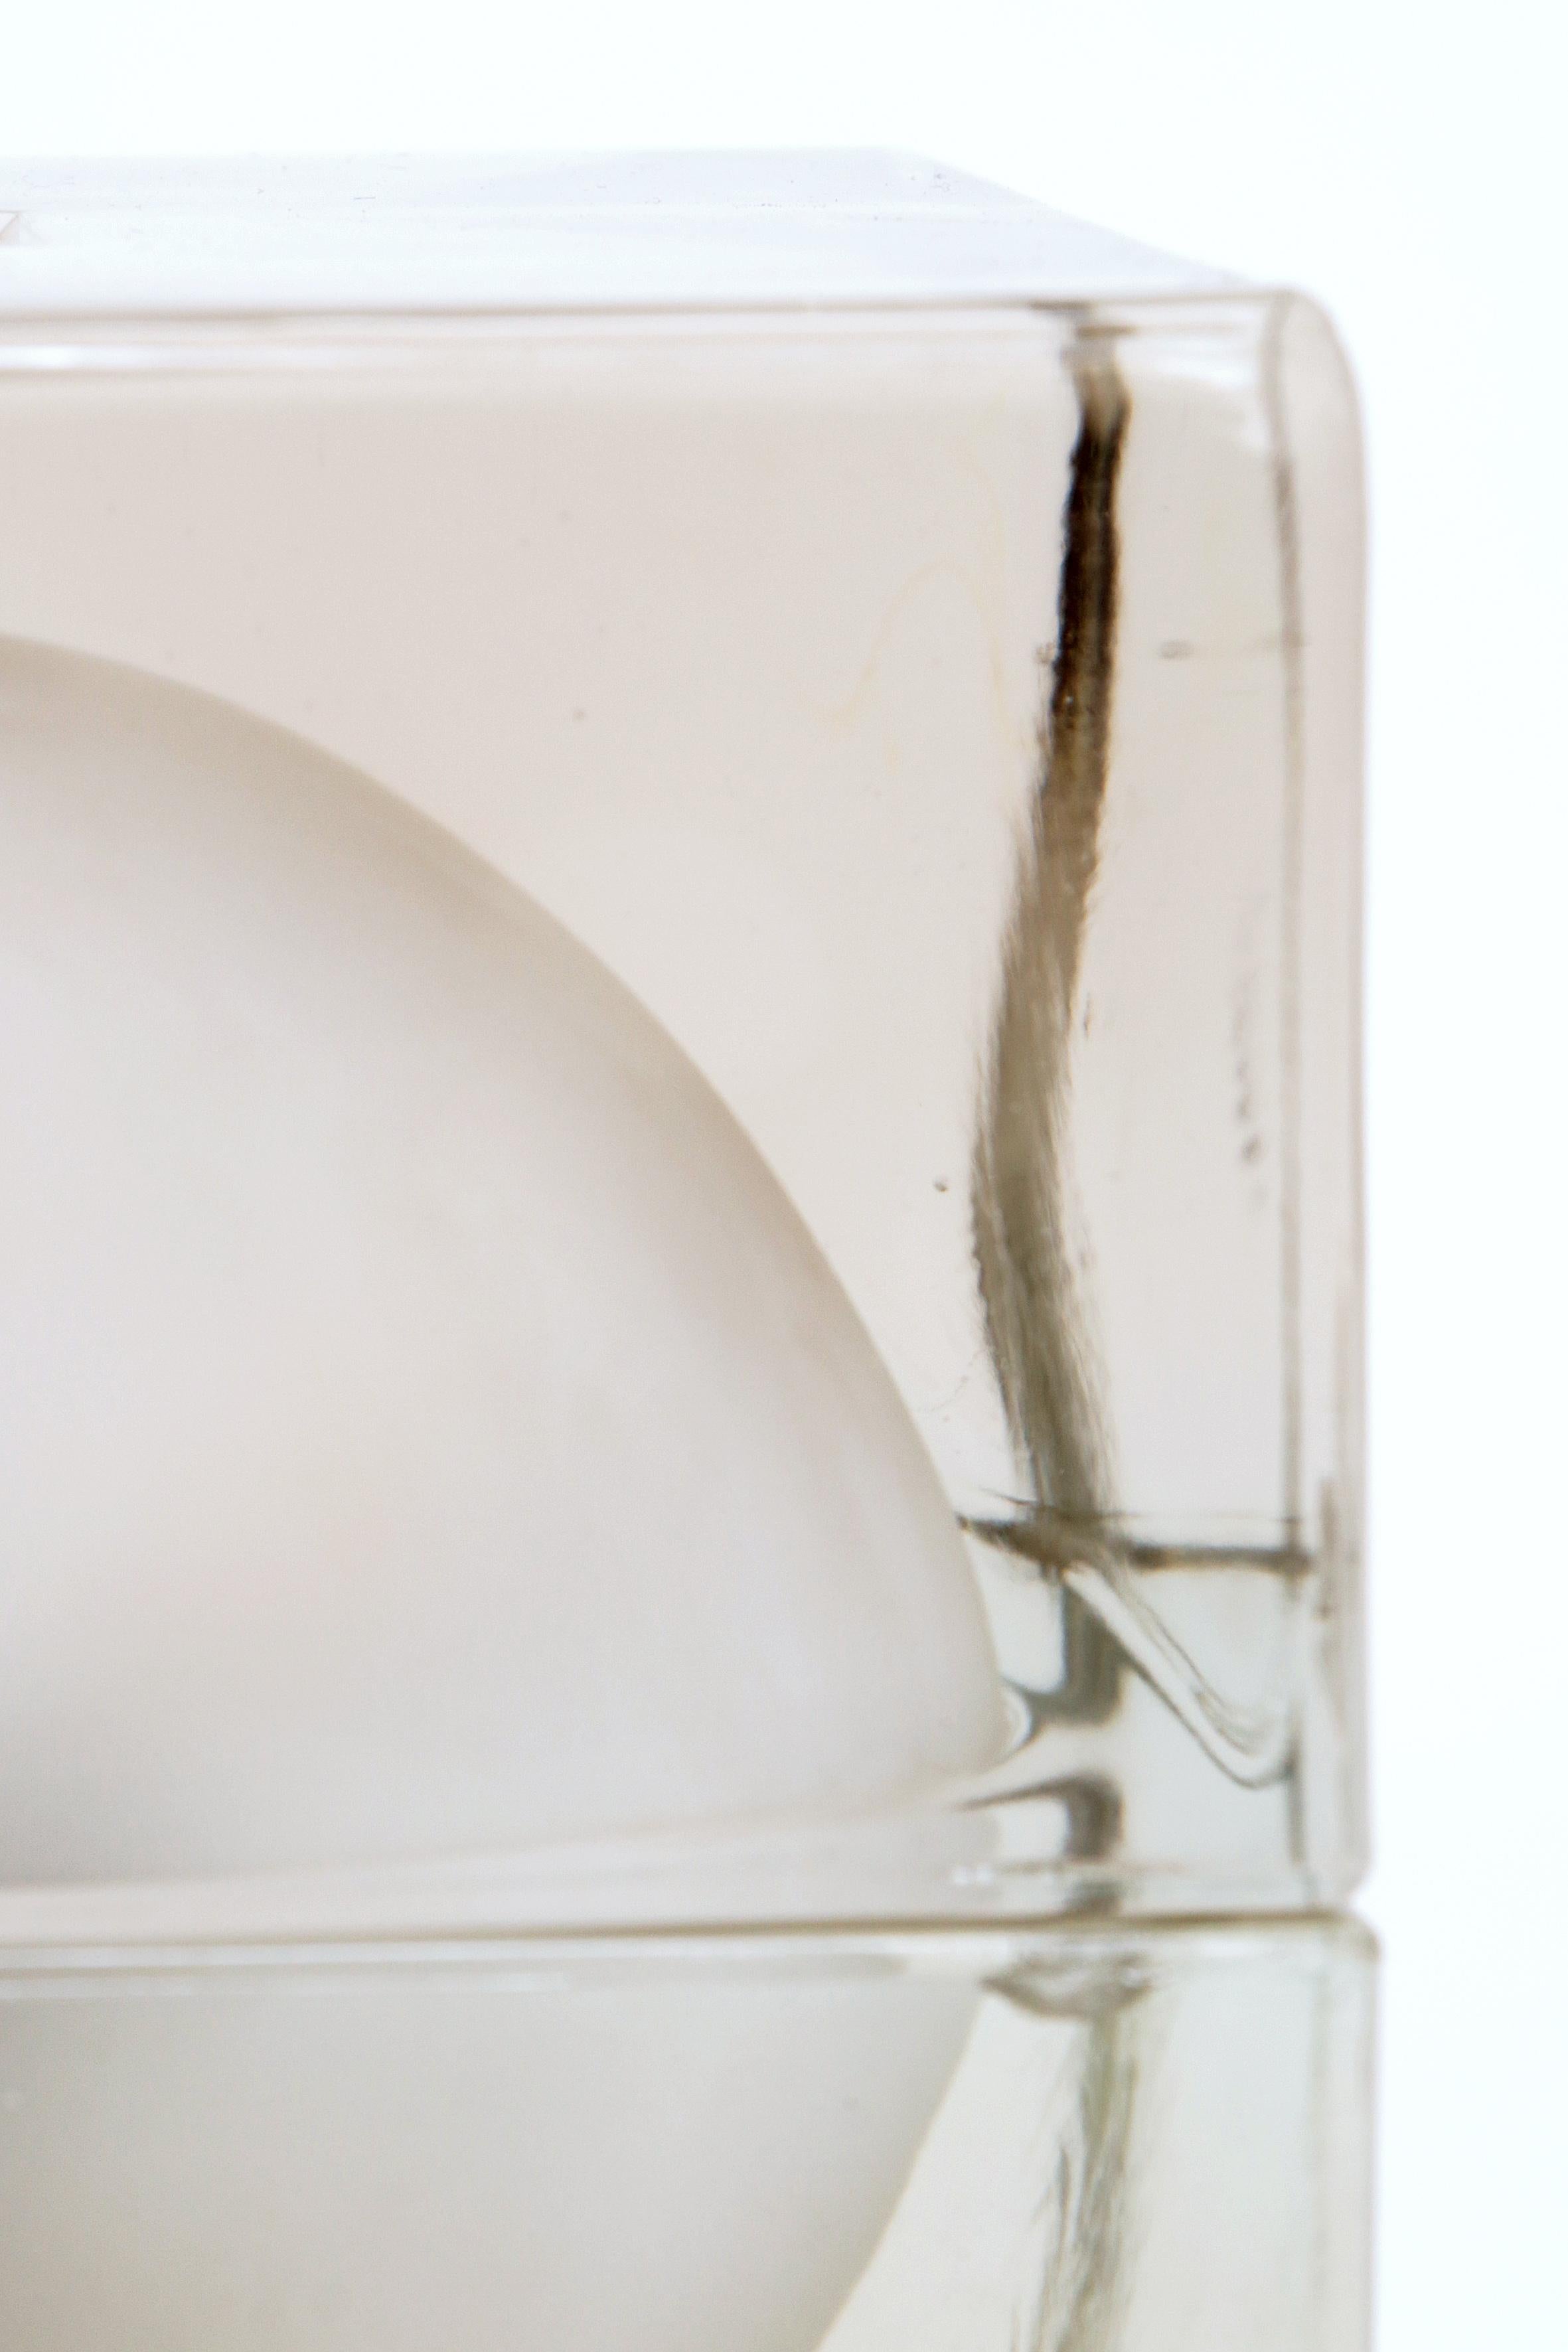 Mid-20th Century Alessandro Mendini “Cubosfera” Table Lamp Metal Crome Glass 1968 Italy